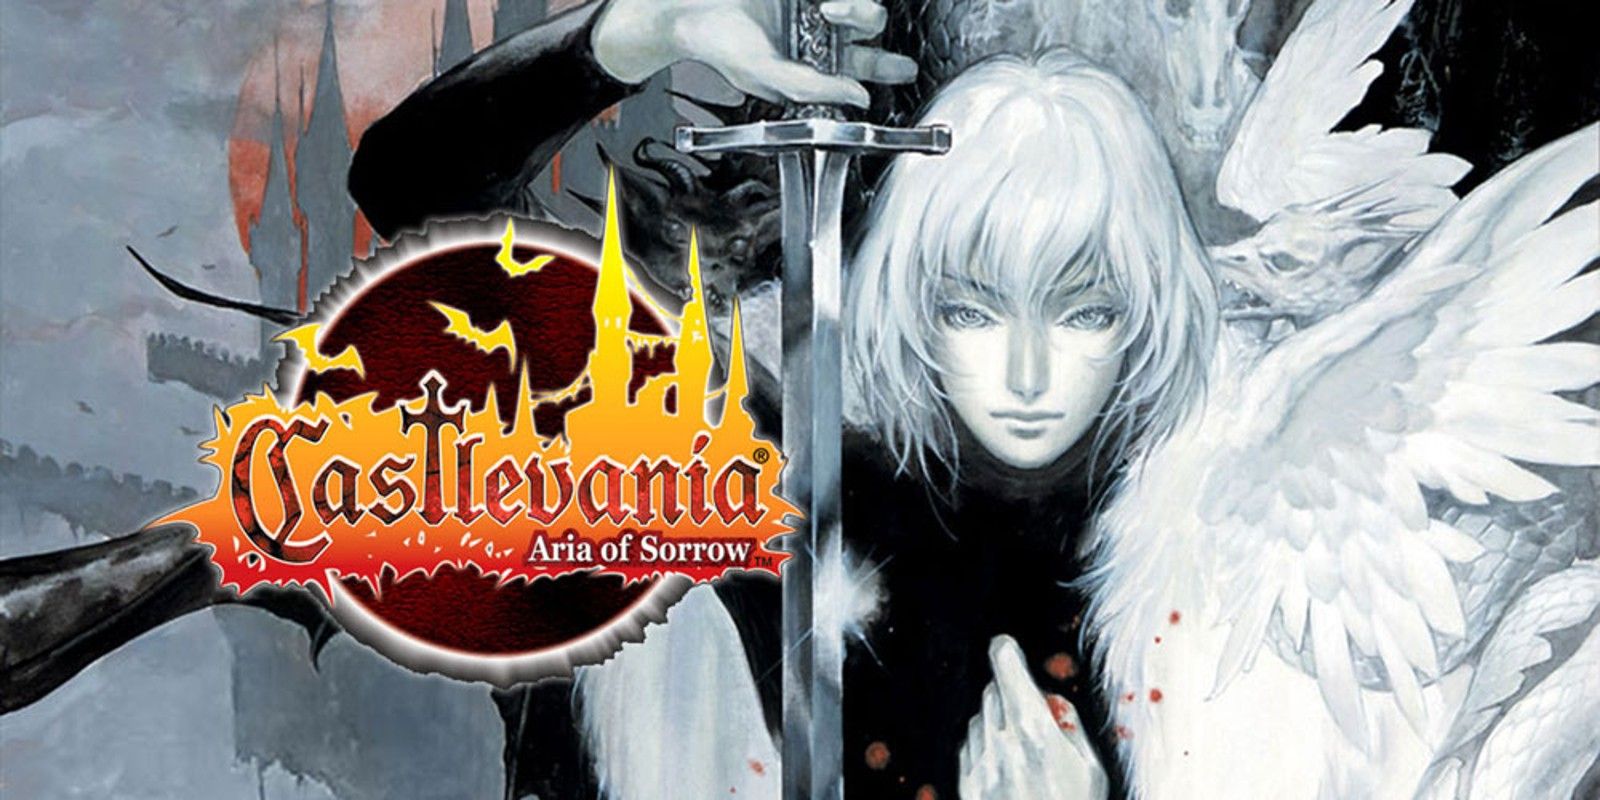 Castlevania: Aria of Sorrow cover art featuring Soma Cruz drawing his sword.